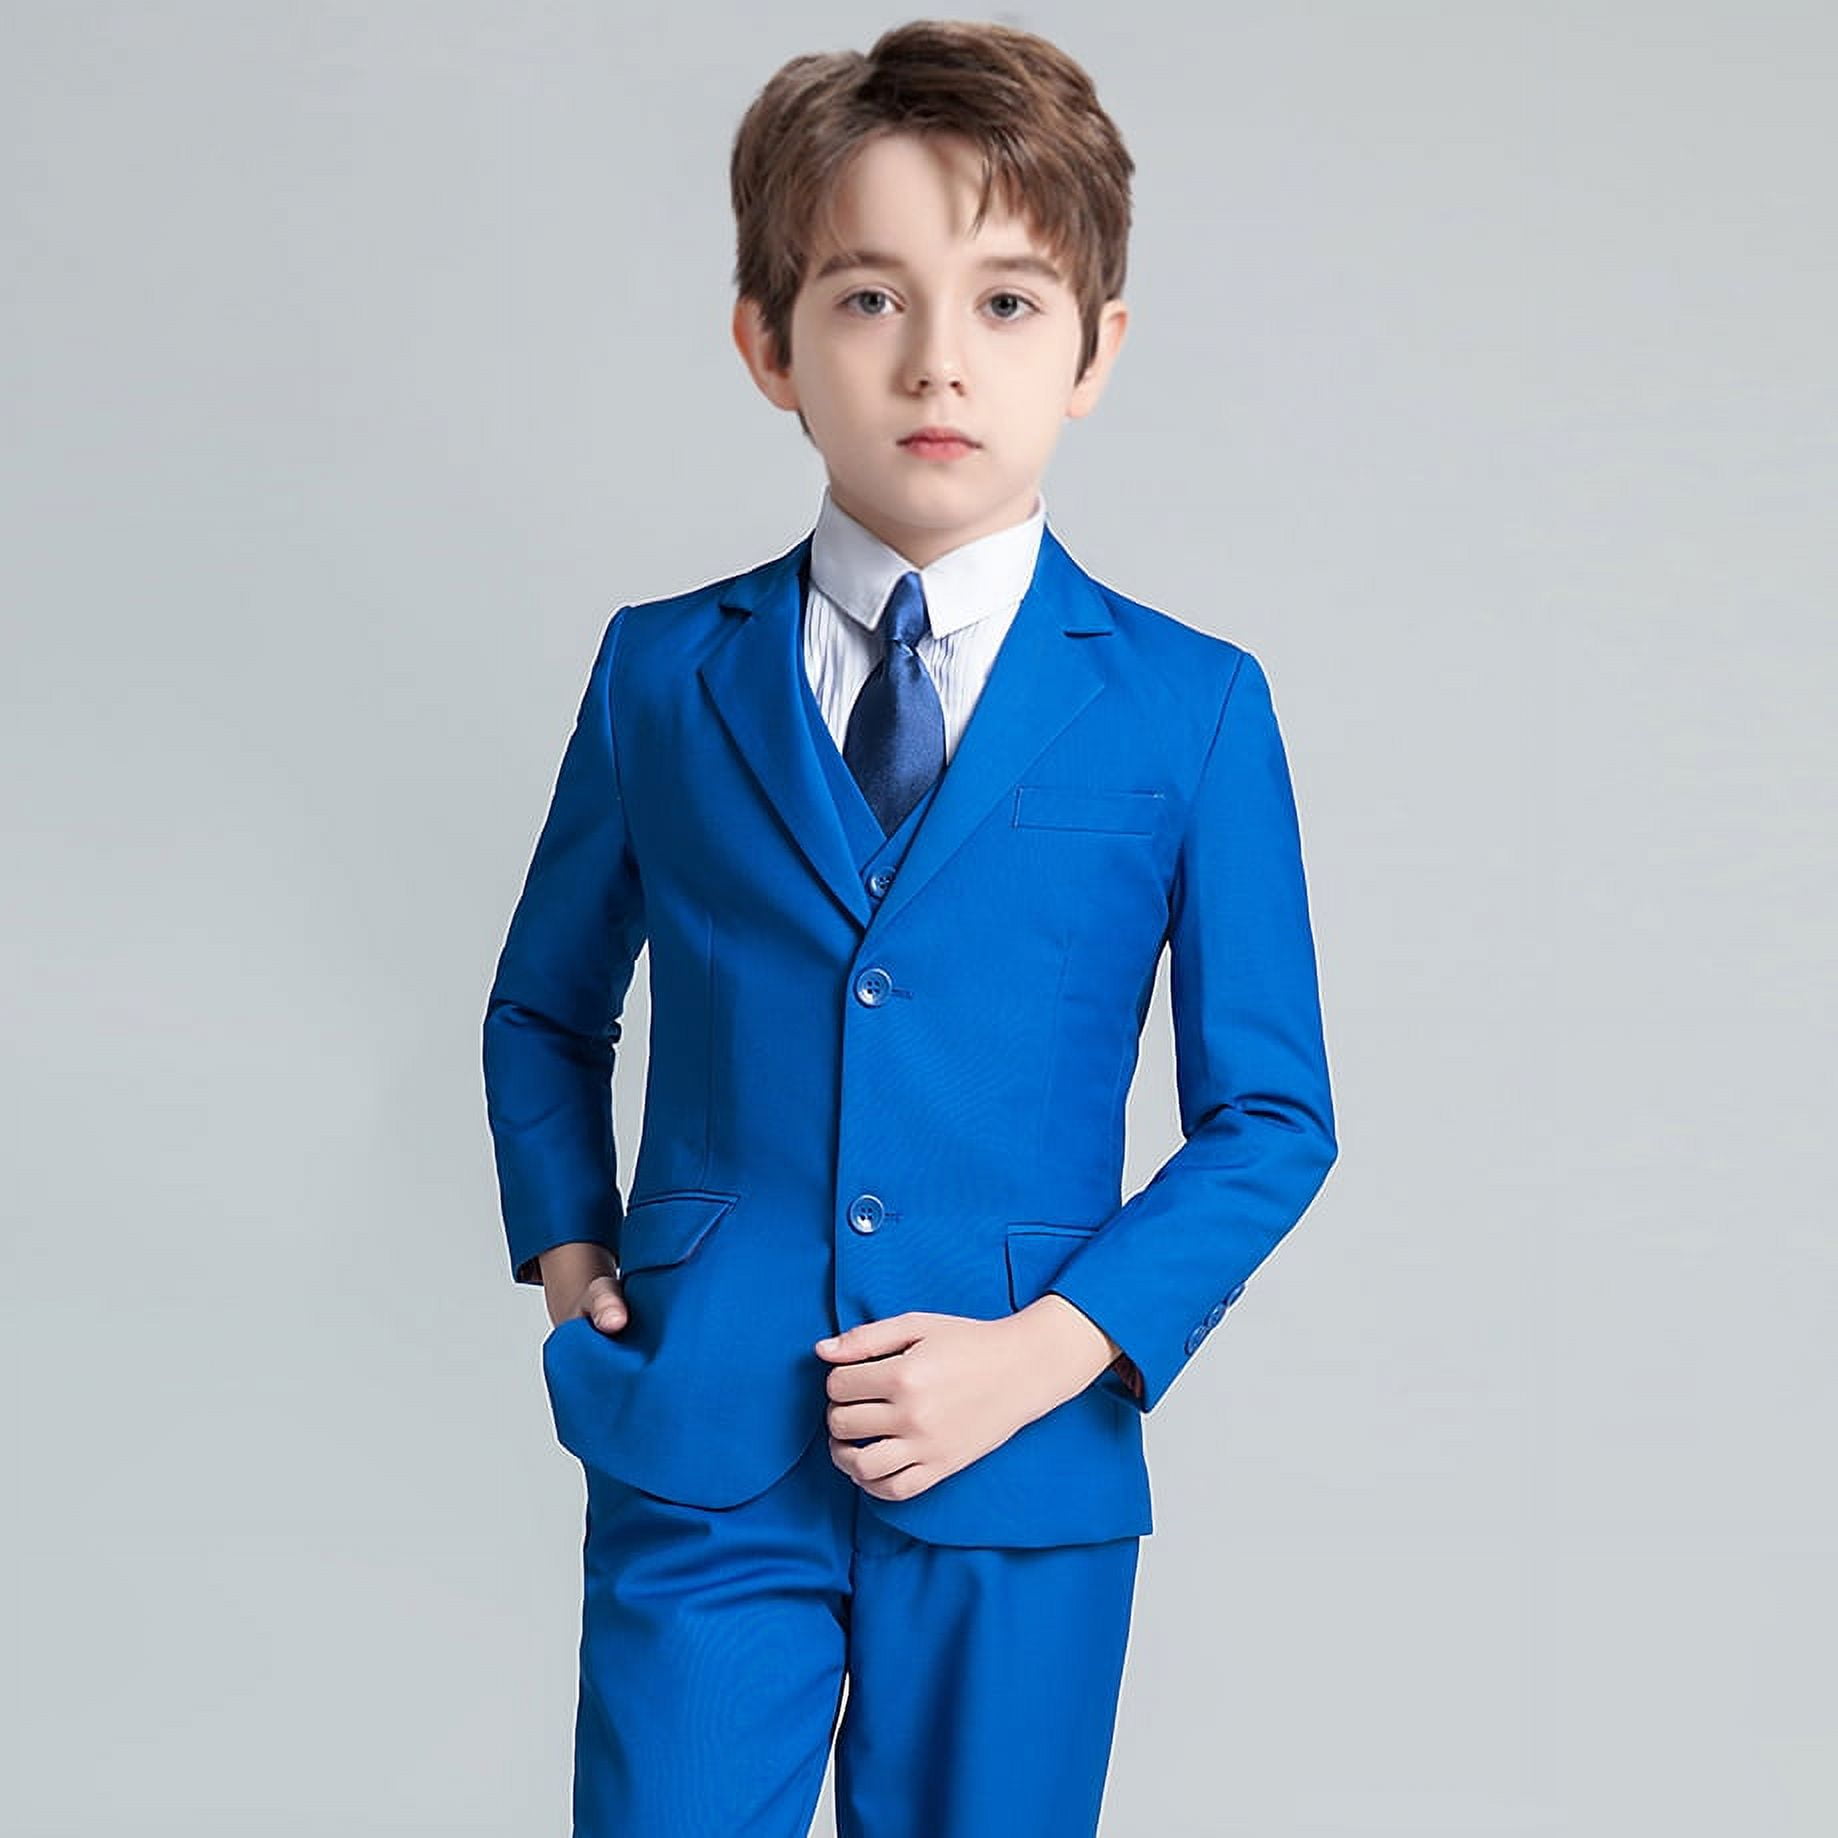 Kids Suits for Boys Dressy Outfit Set Boys' Suits Boys Dress Clothes  Christmas Outfit Blue Suit Size 8